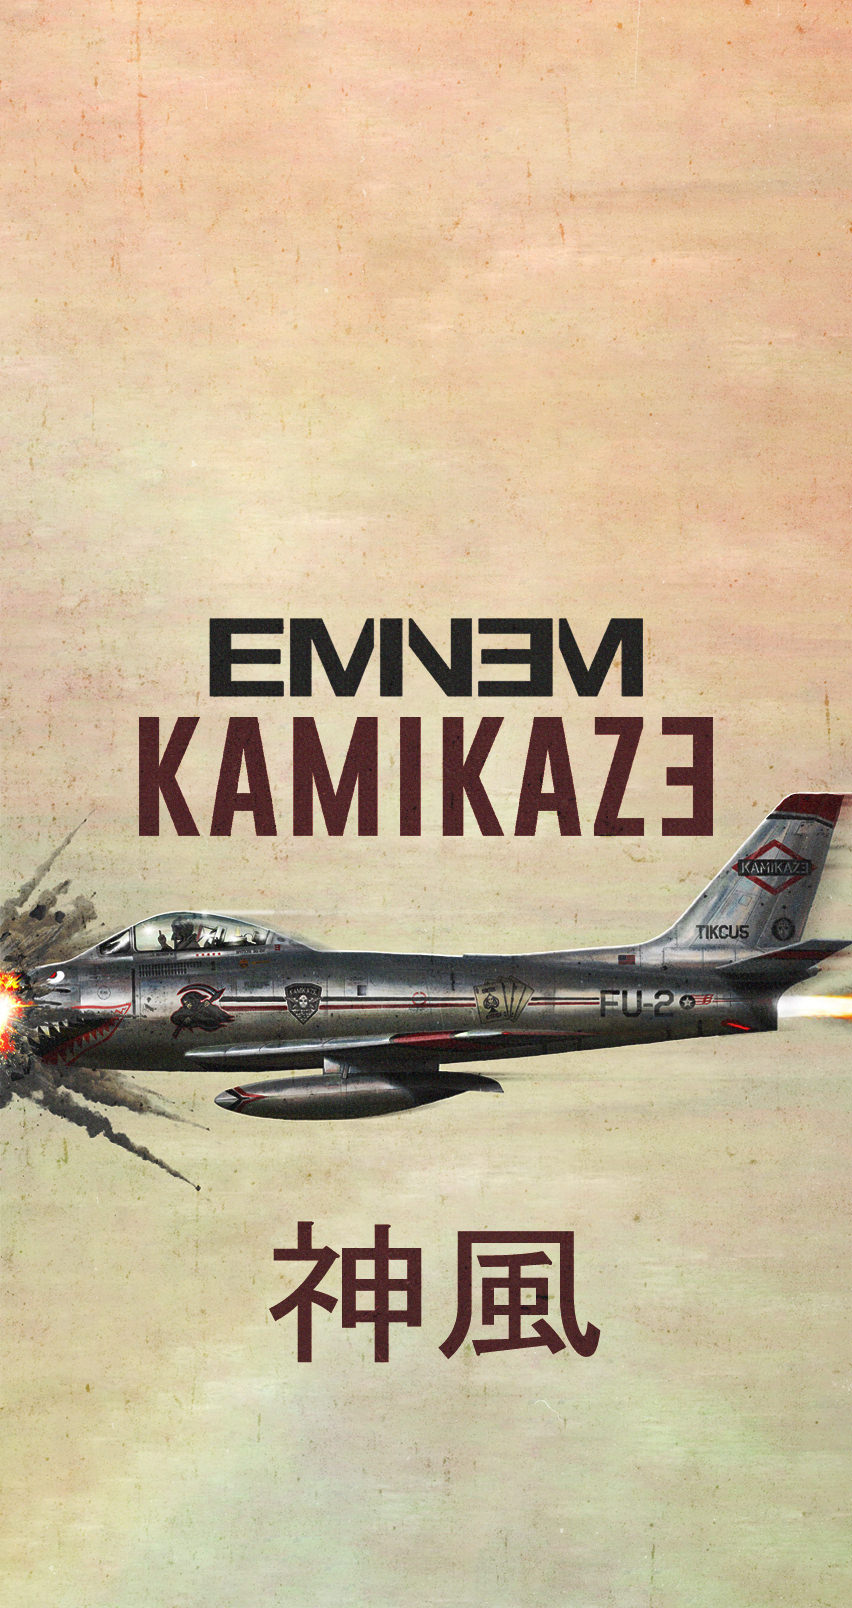 Eminem Kamikaze Wallpaper By Bandicootdesign